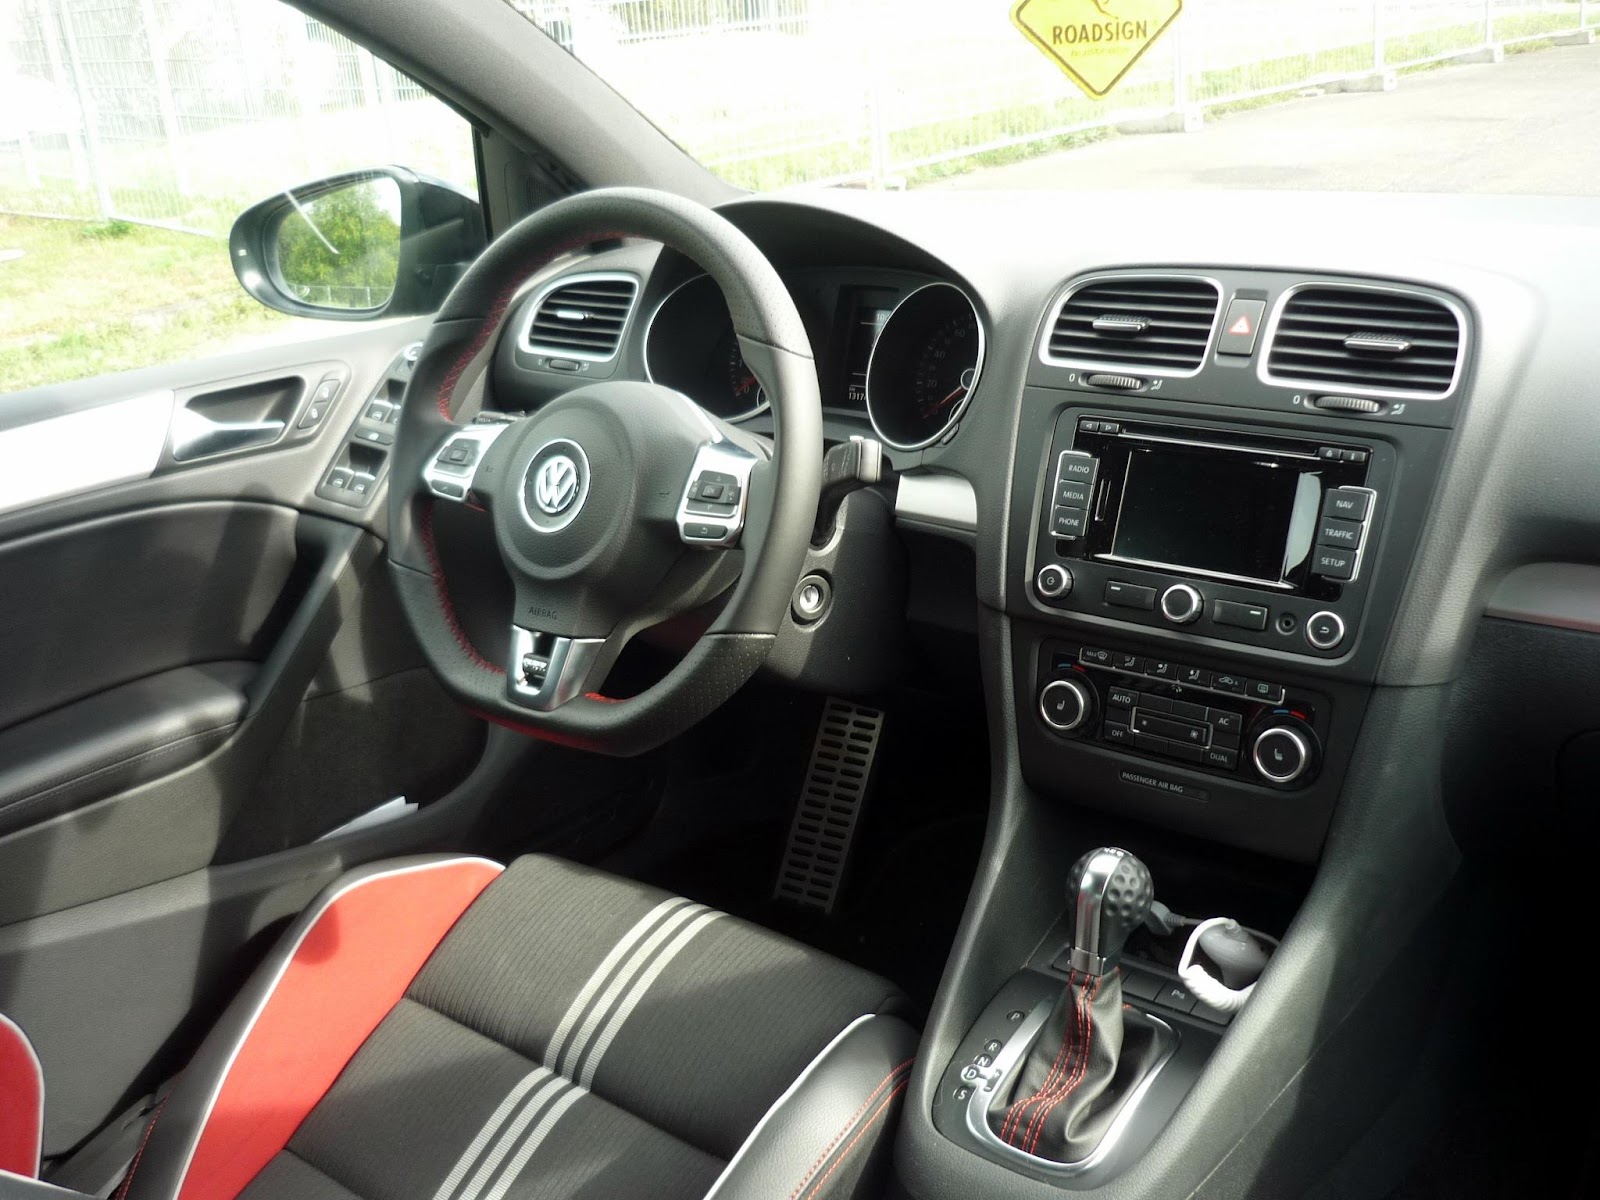 Guitigefilmpjes: update: Volkswagen Golf VI